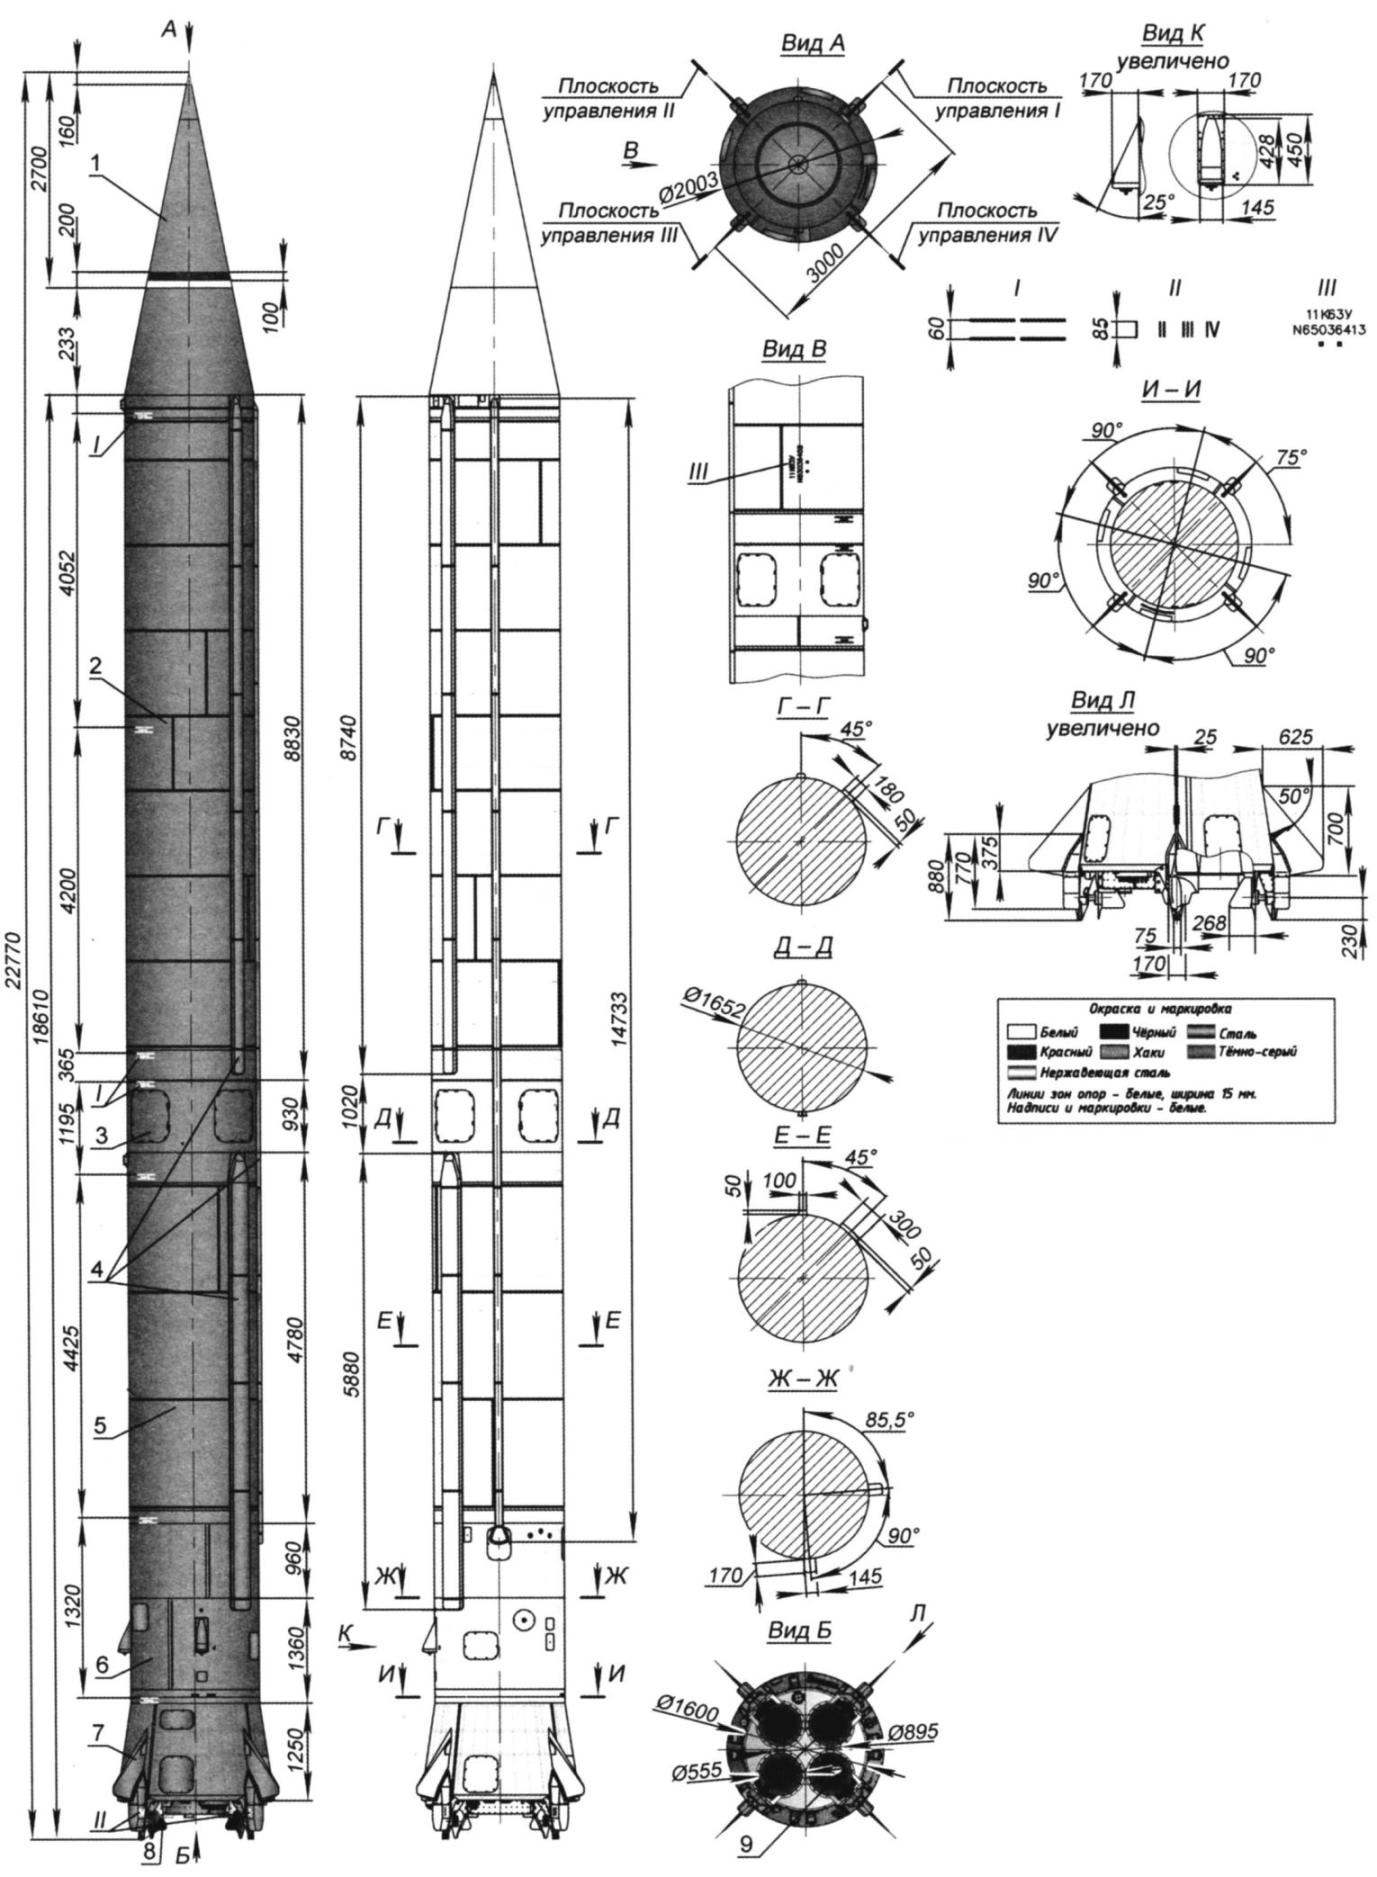 Fig. 1. Ballistic medium-range missile R-12 (8K63 index)